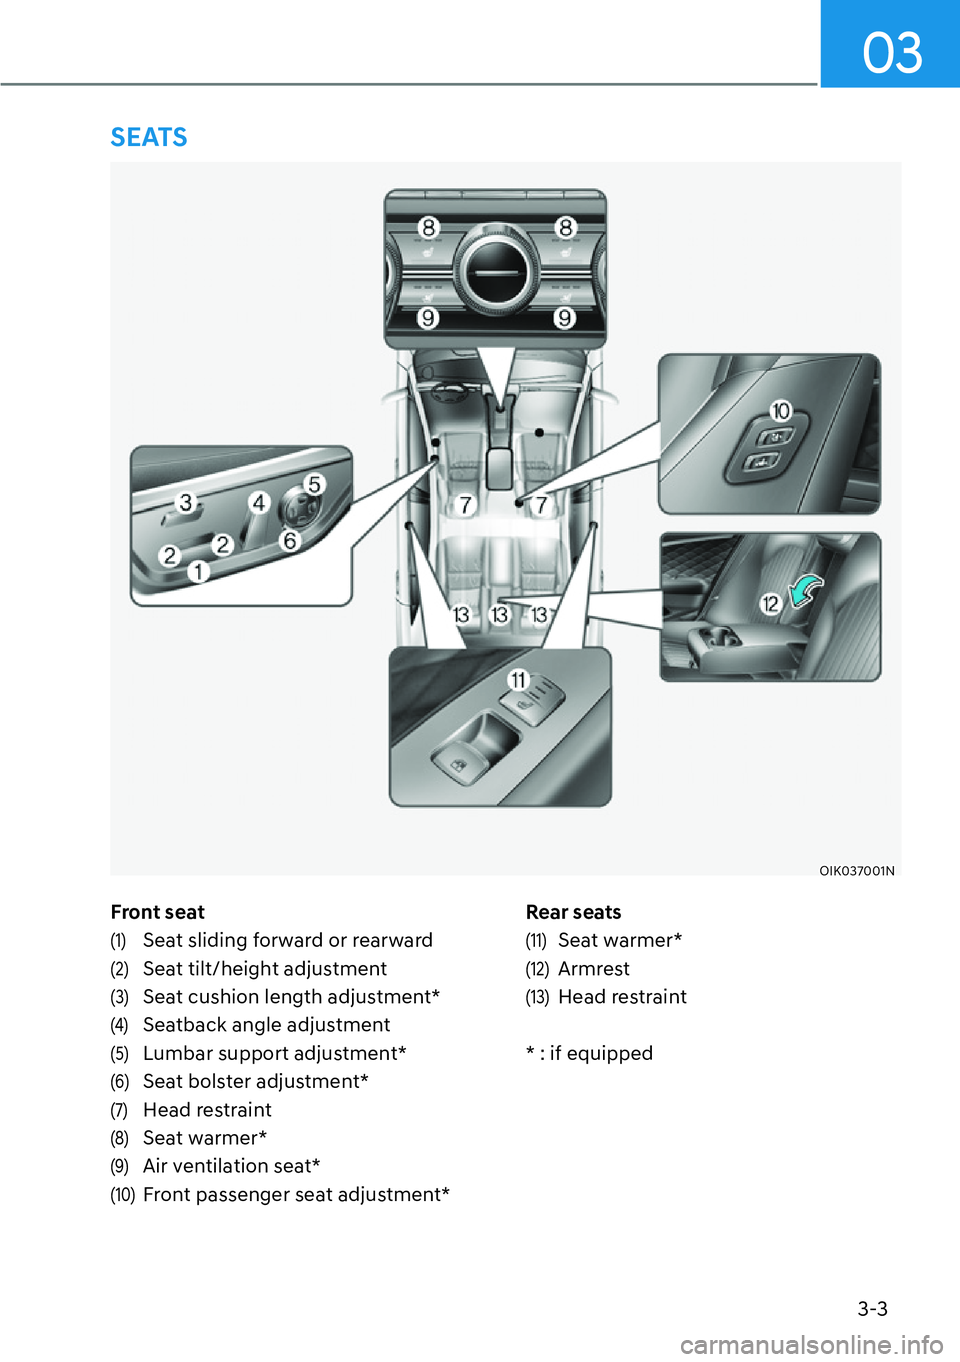 HYUNDAI GENESIS G70 2022  Owners Manual 3-3
03
Front seat
(1) Seat sliding forward or rearward
(2) Seat tilt/height adjustment
(3) Seat cushion length adjustment*
(4) Seatback angle adjustment
(5) Lumbar support adjustment*
(6) Seat bolster